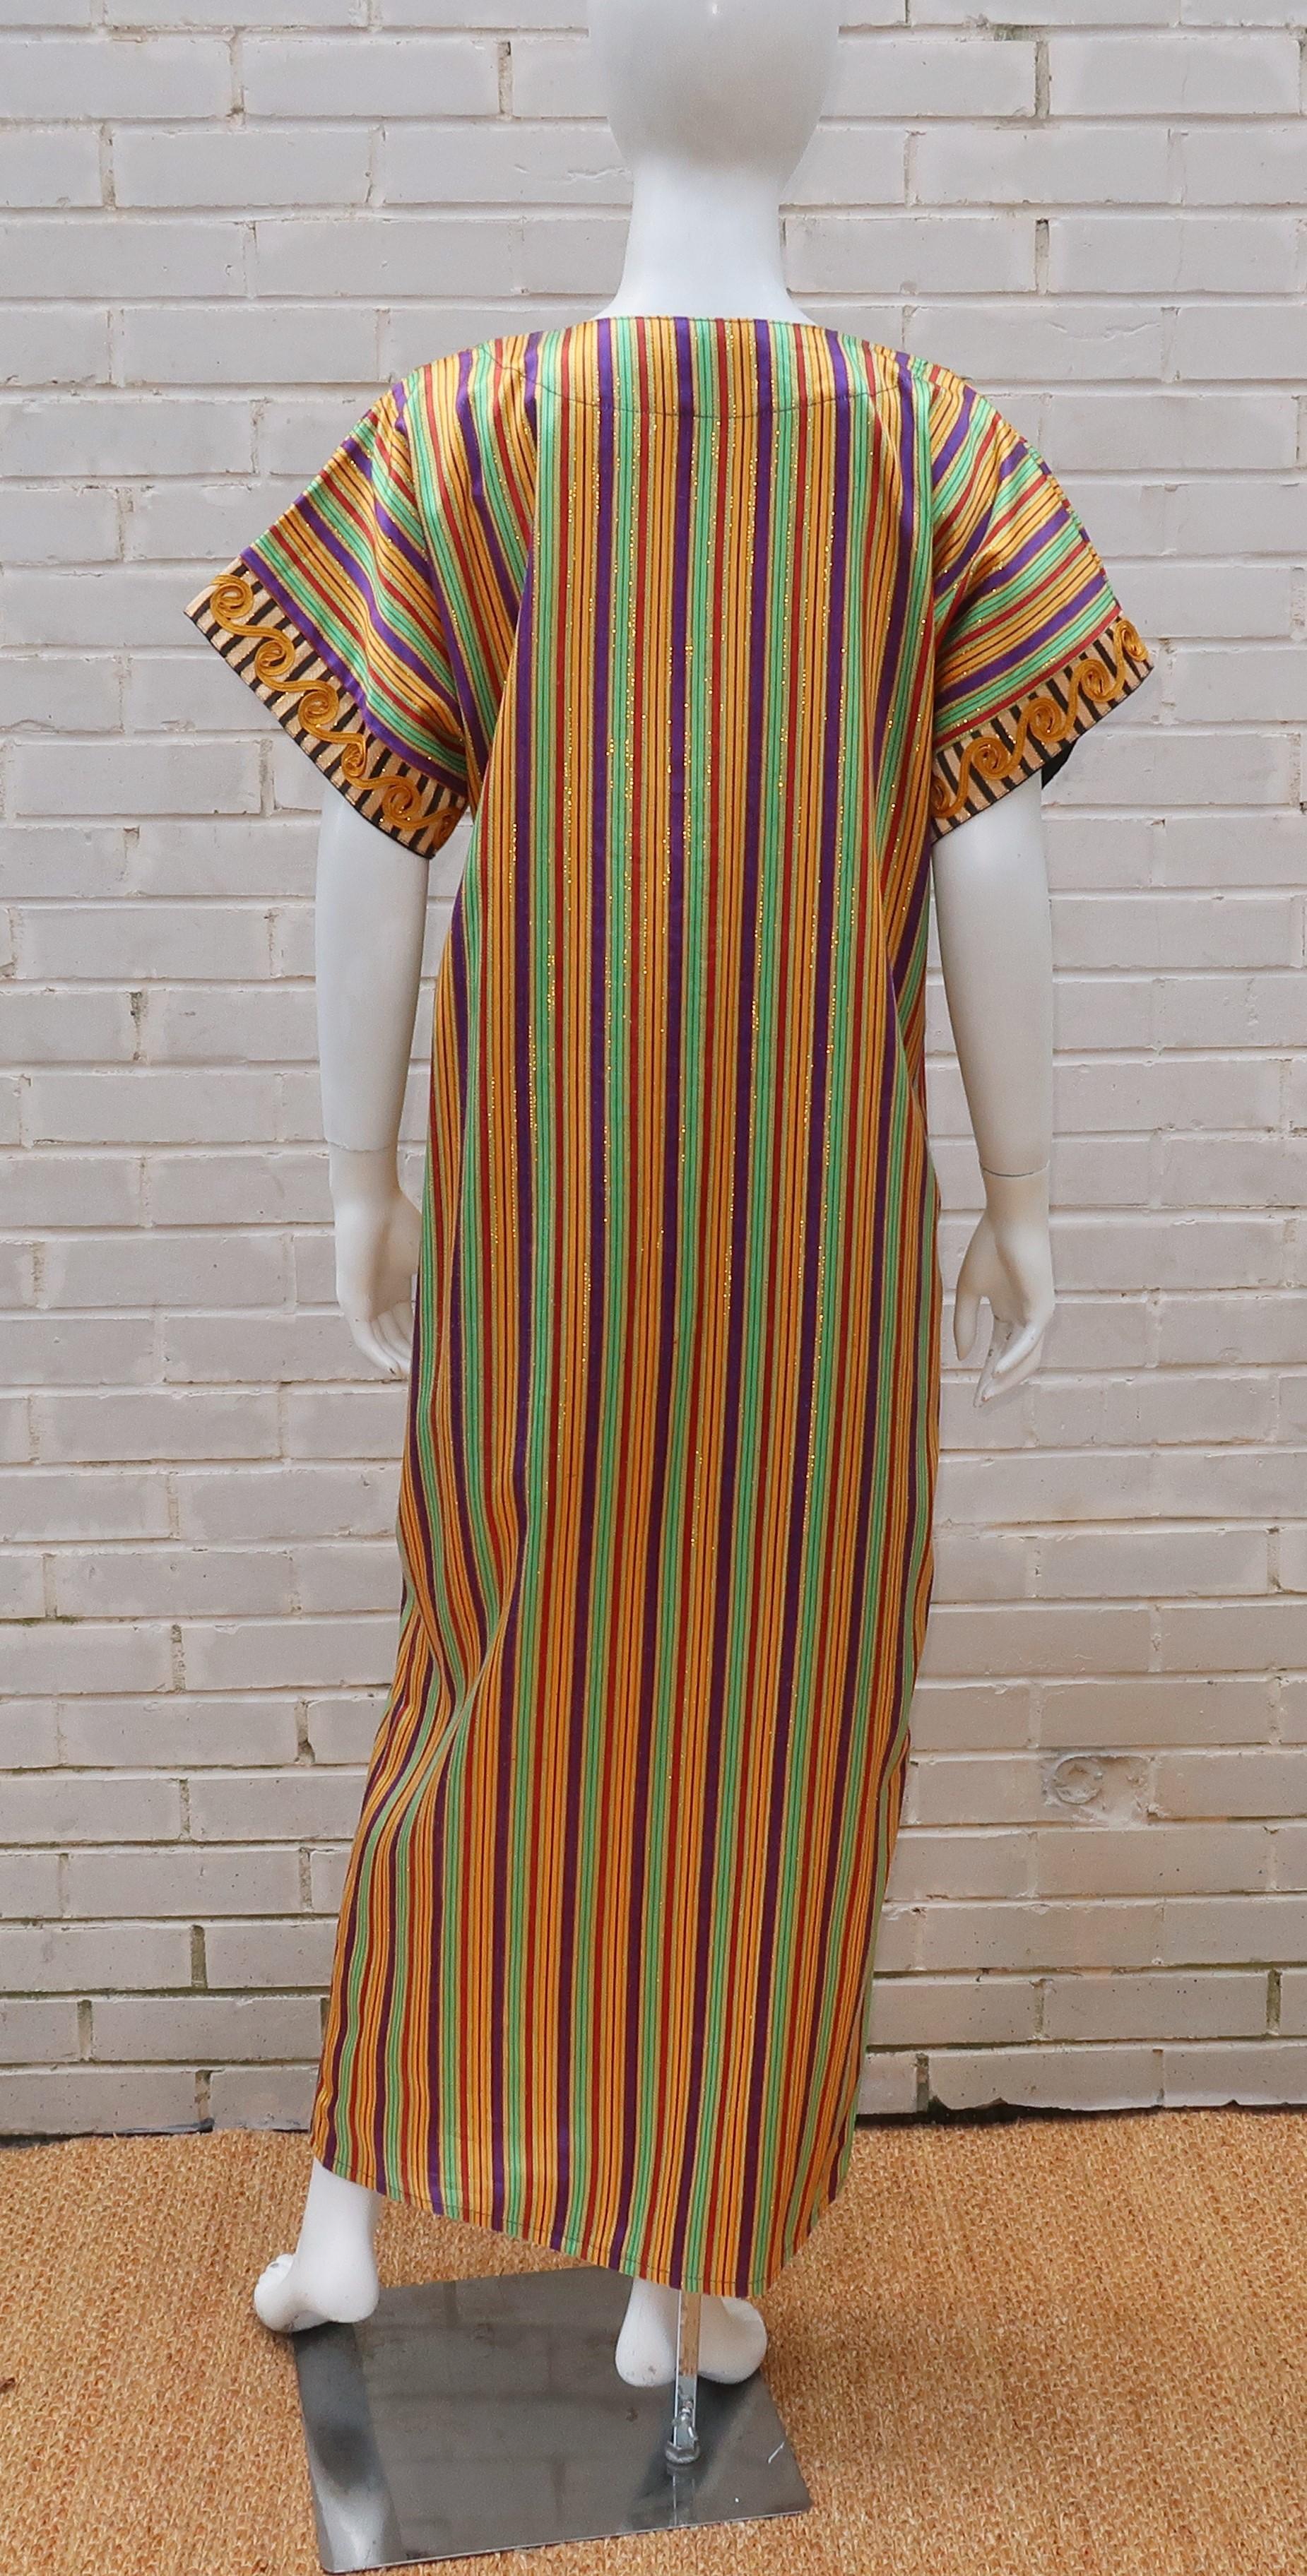 Egyptian Vintage Striped Caftan Dress With Ornate Trim 5